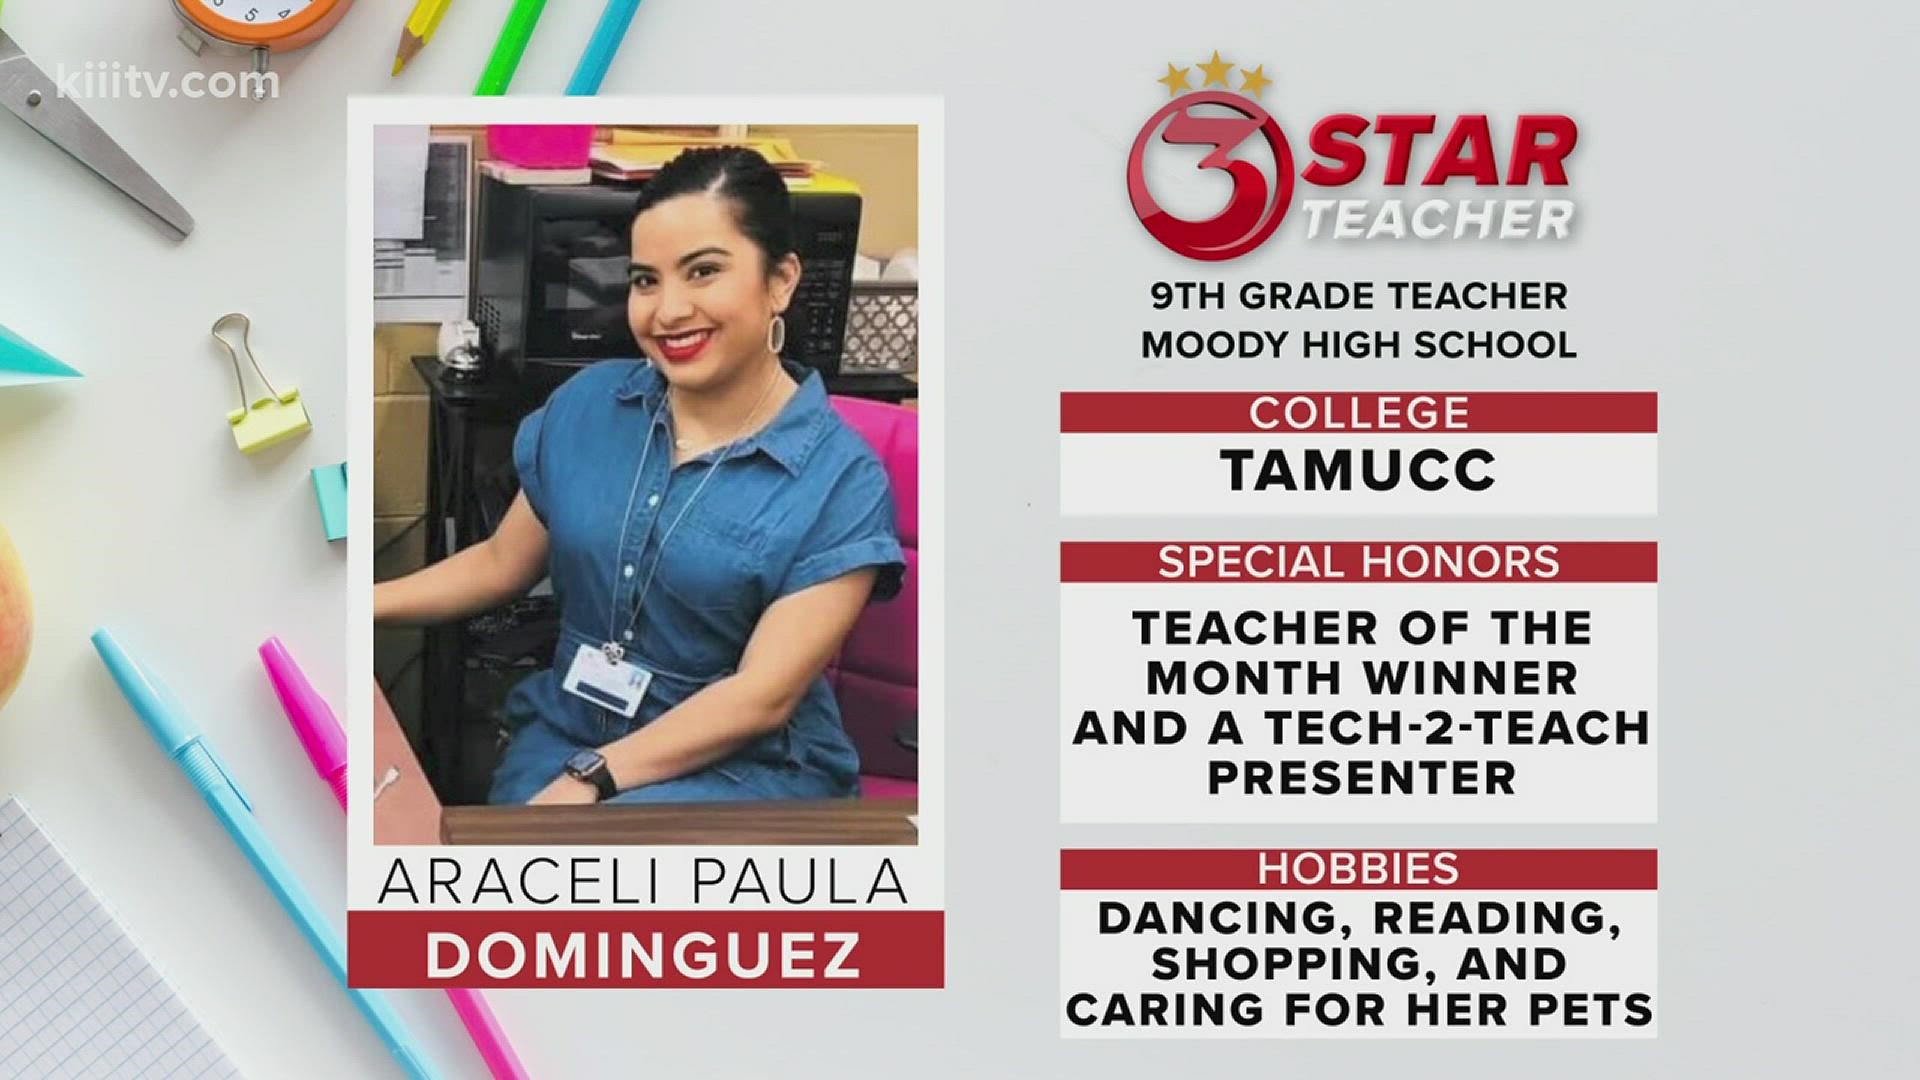 Araceli is a 9th grade teacher at Moody High School.